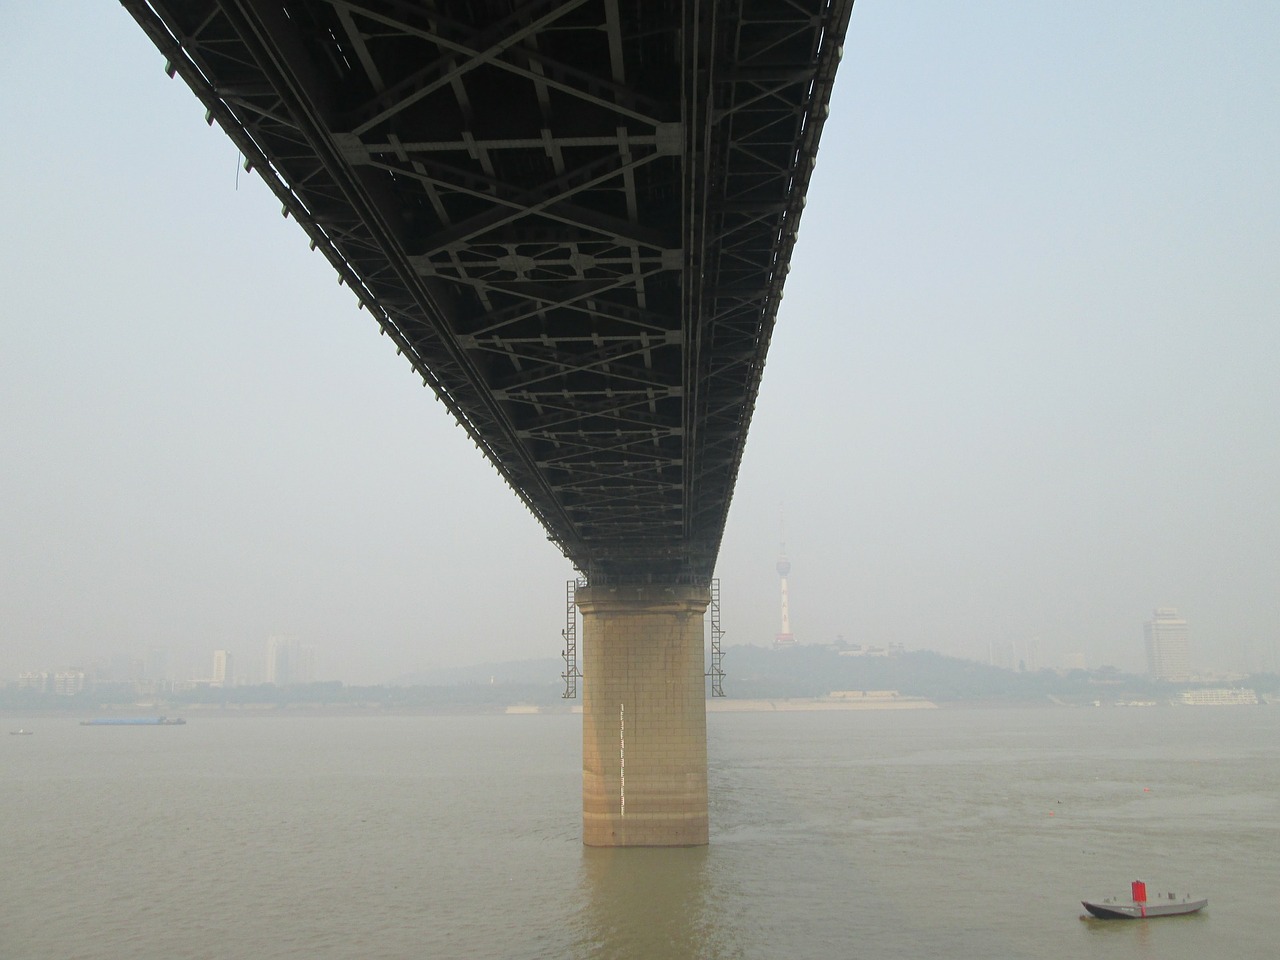 wuhan yangtze river bridge building the yangtze river free photo